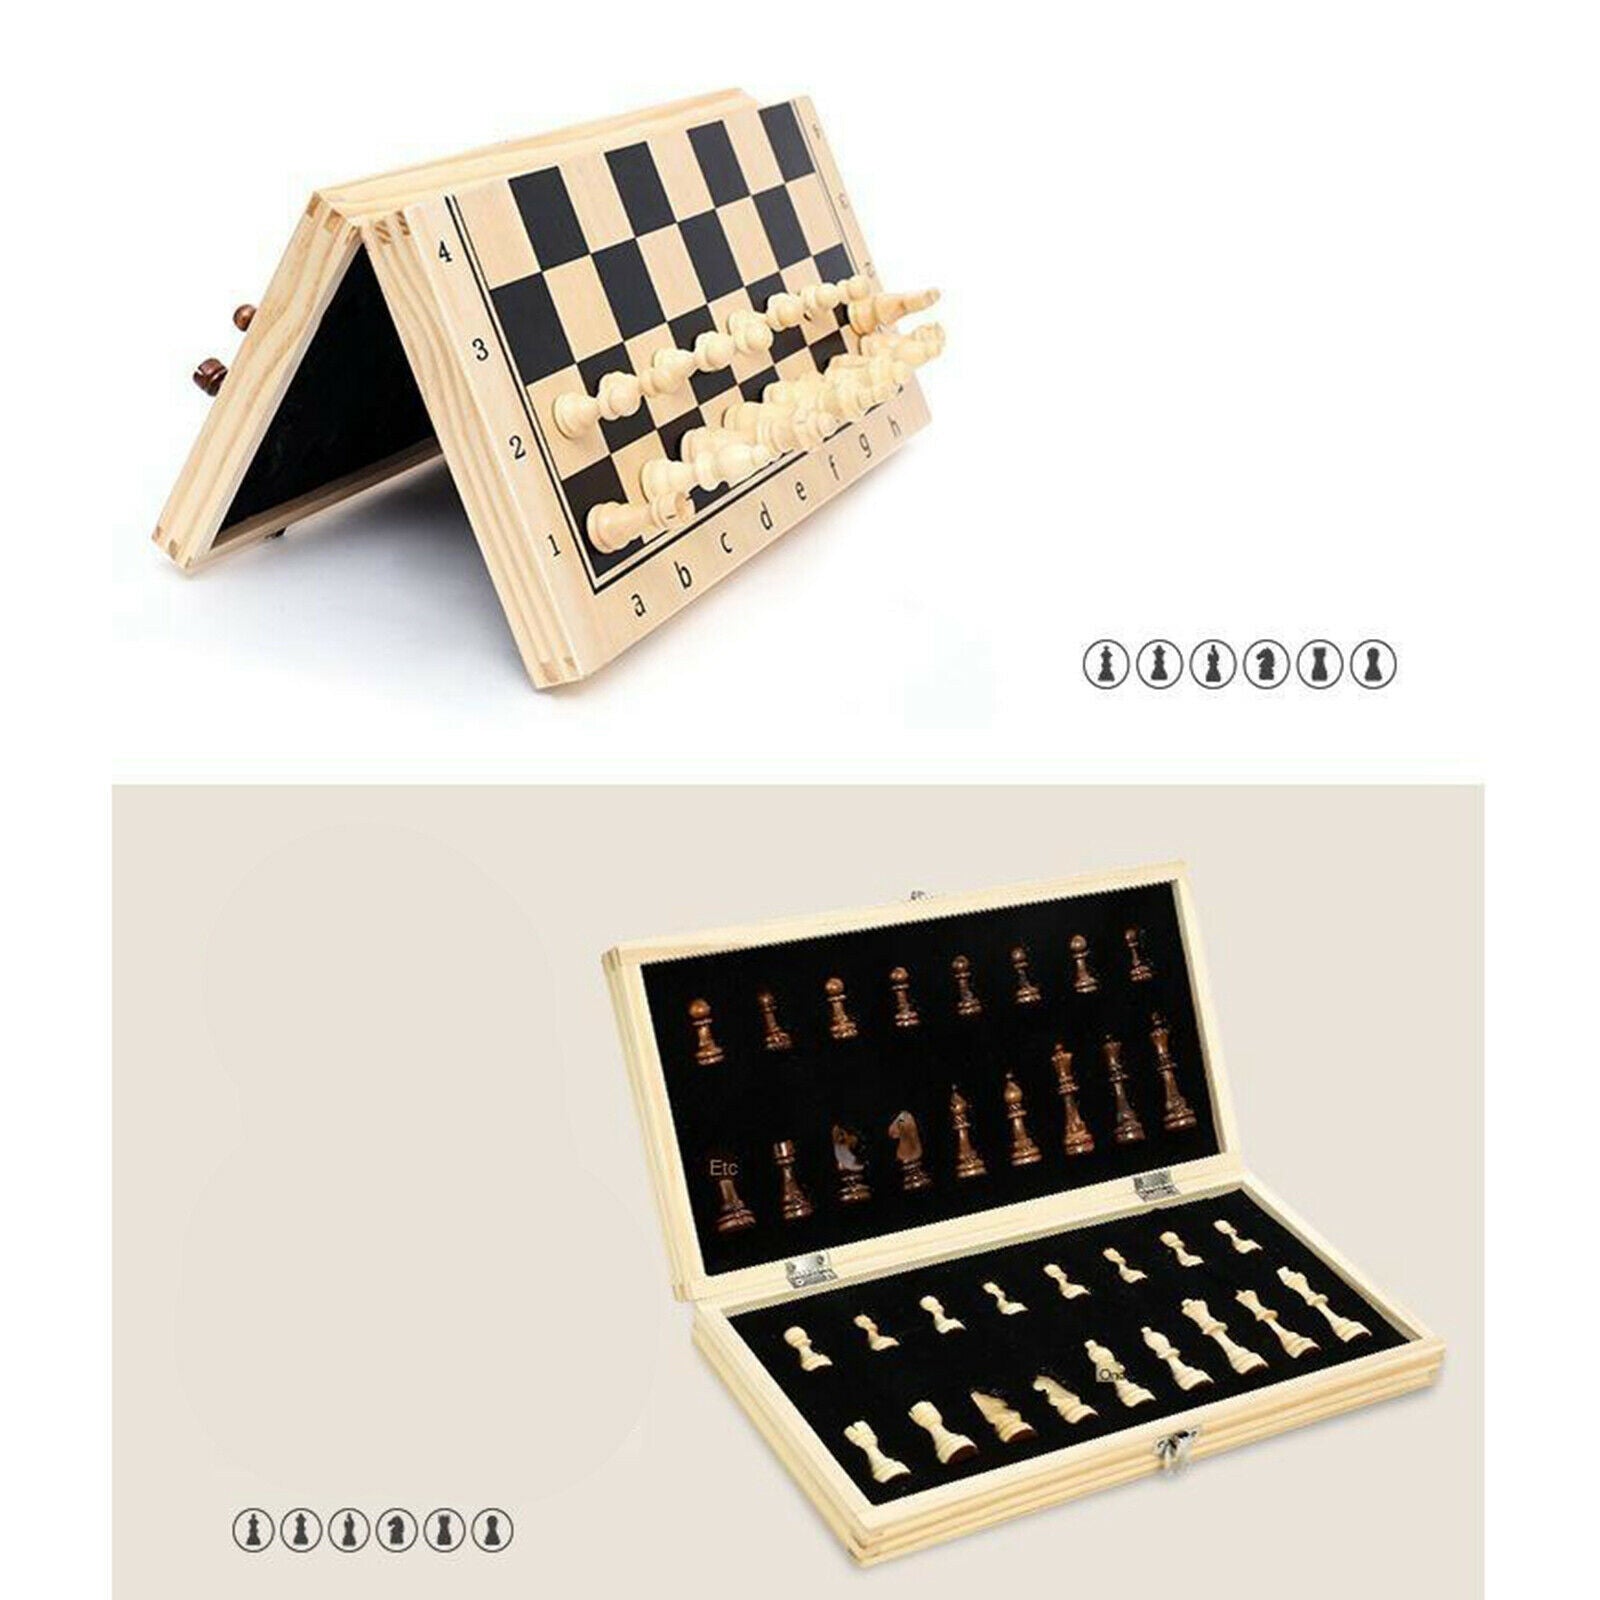 Handmade Folding  Chess Board Board Game 15x15 Inch for Kids Adults